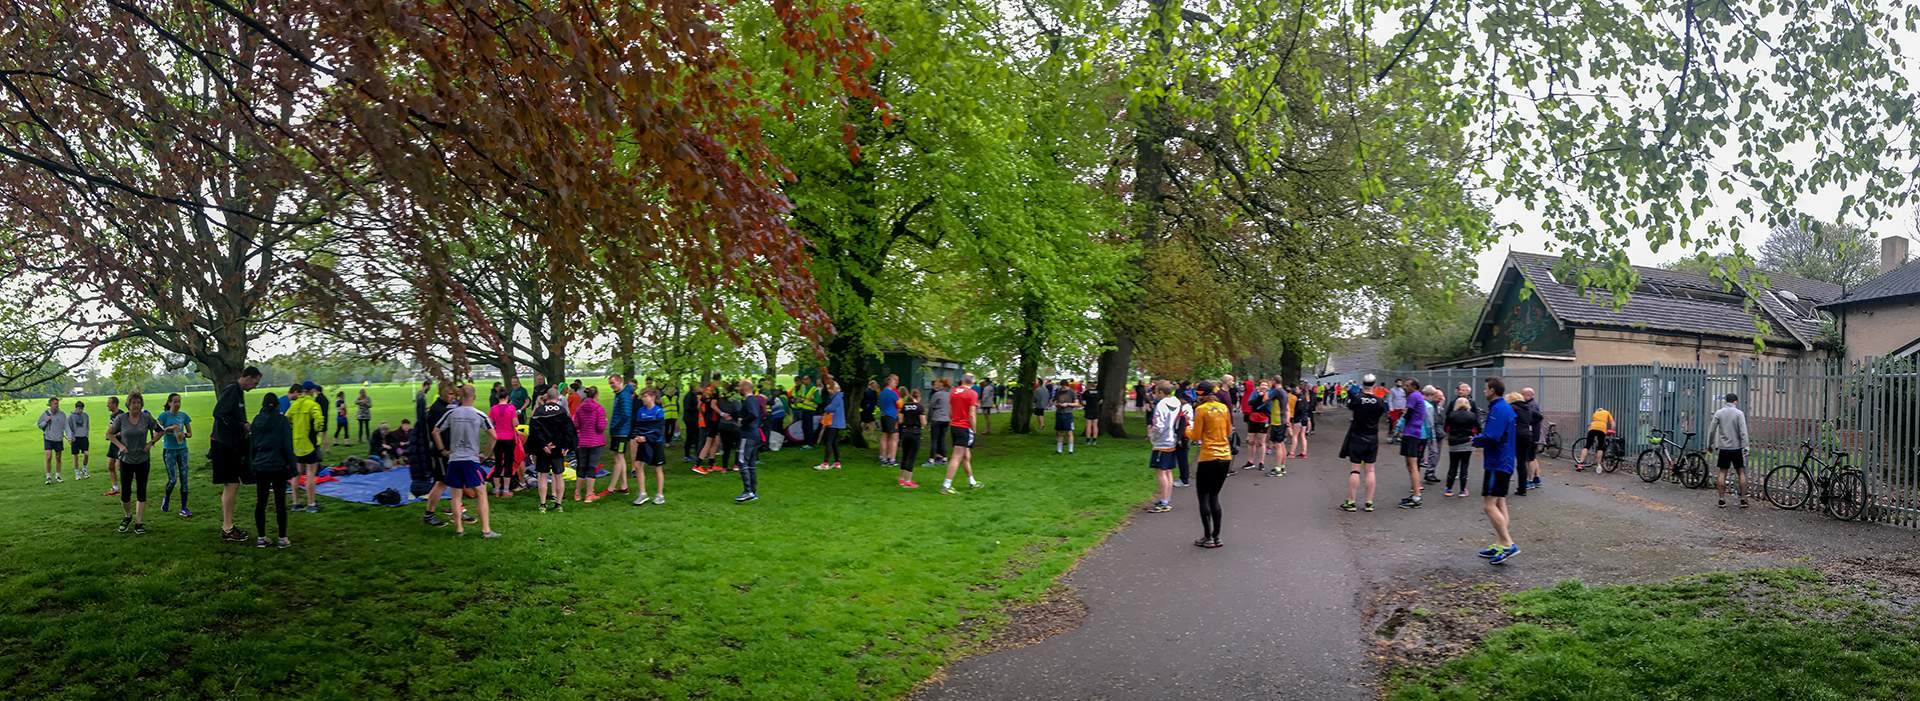 Runners gathering on Saturday Morning for Gunnersbury Parkrun in London